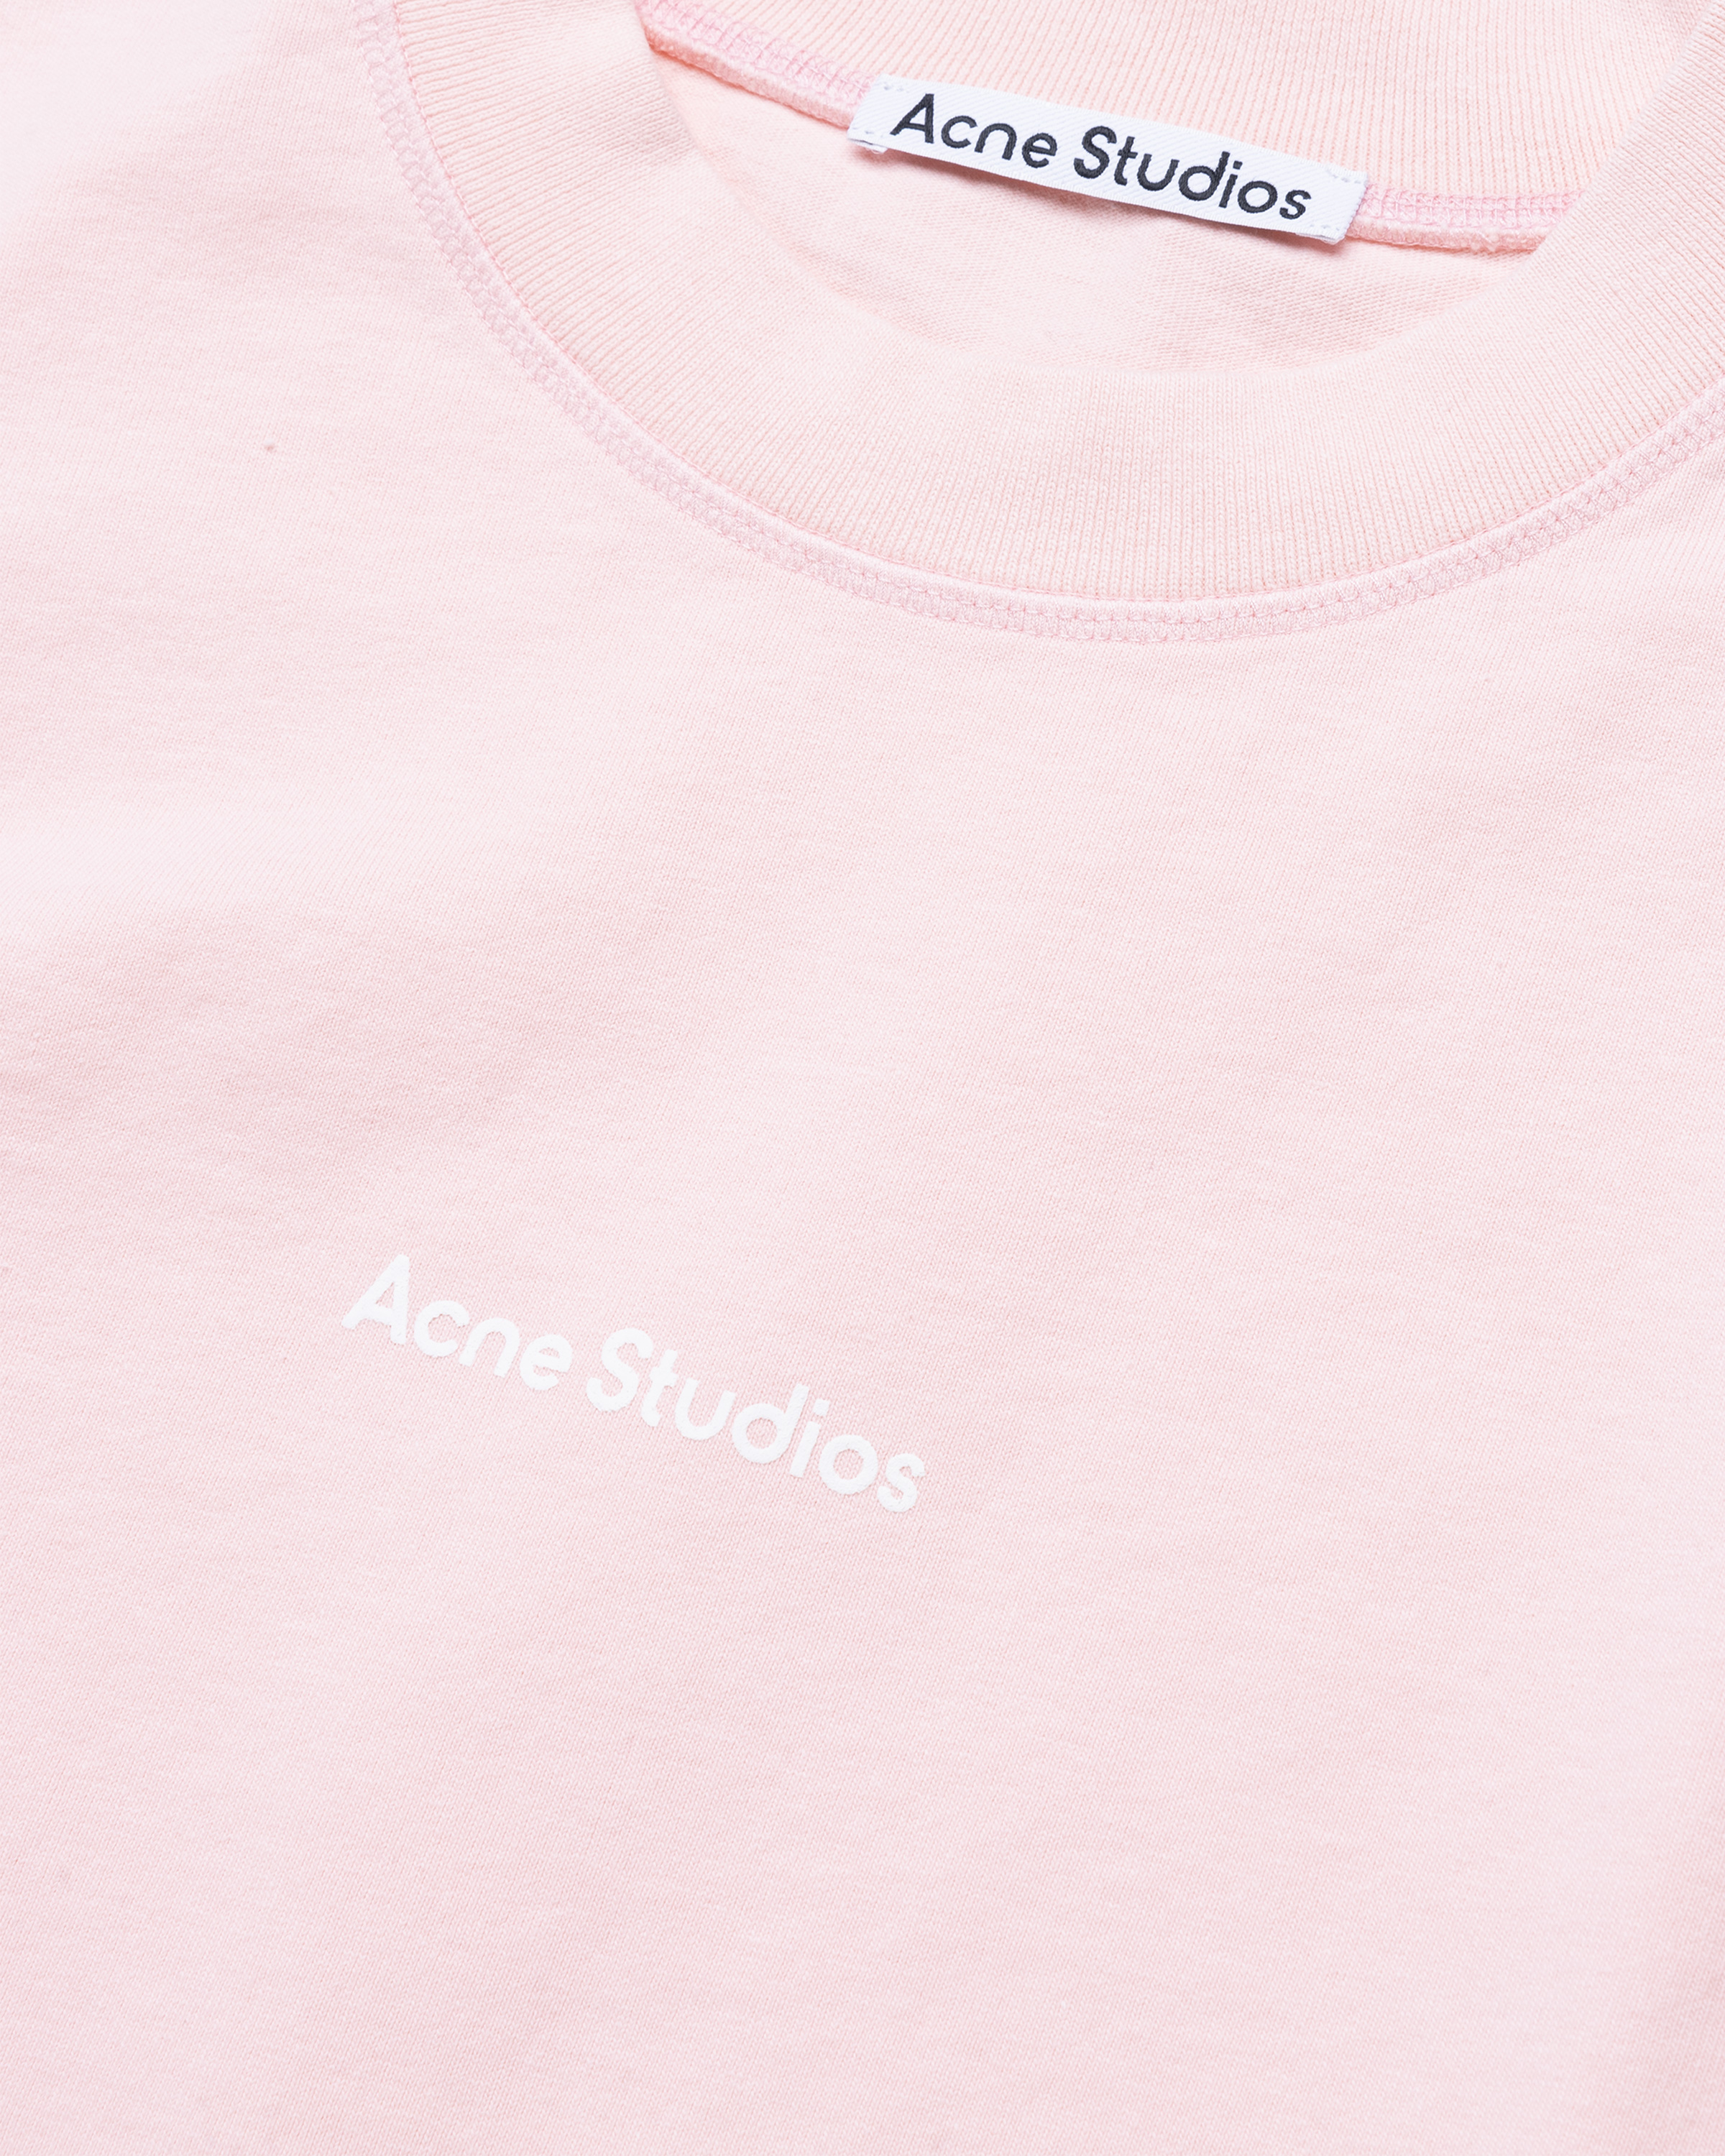 Acne Studios - Logo T-Shirt Pale Pink - Clothing - Pink - Image 6